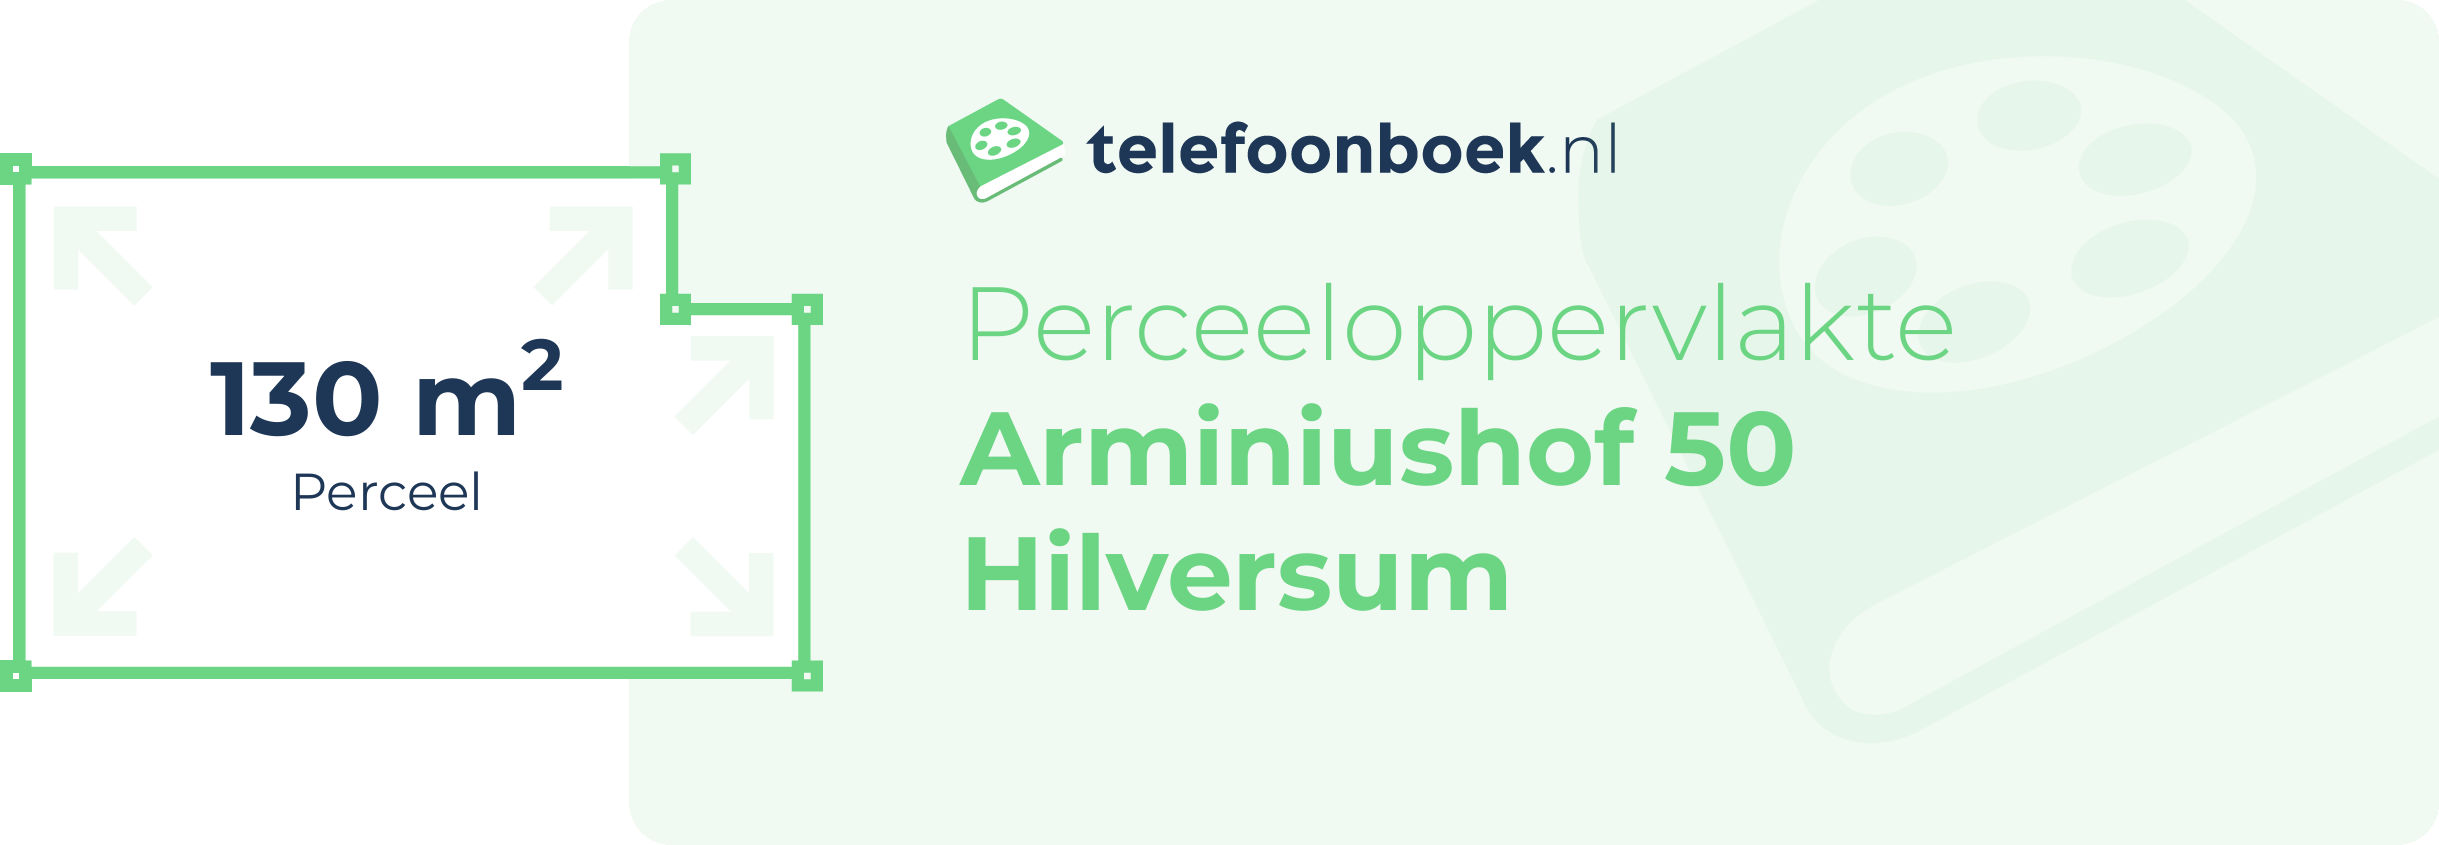 Perceeloppervlakte Arminiushof 50 Hilversum